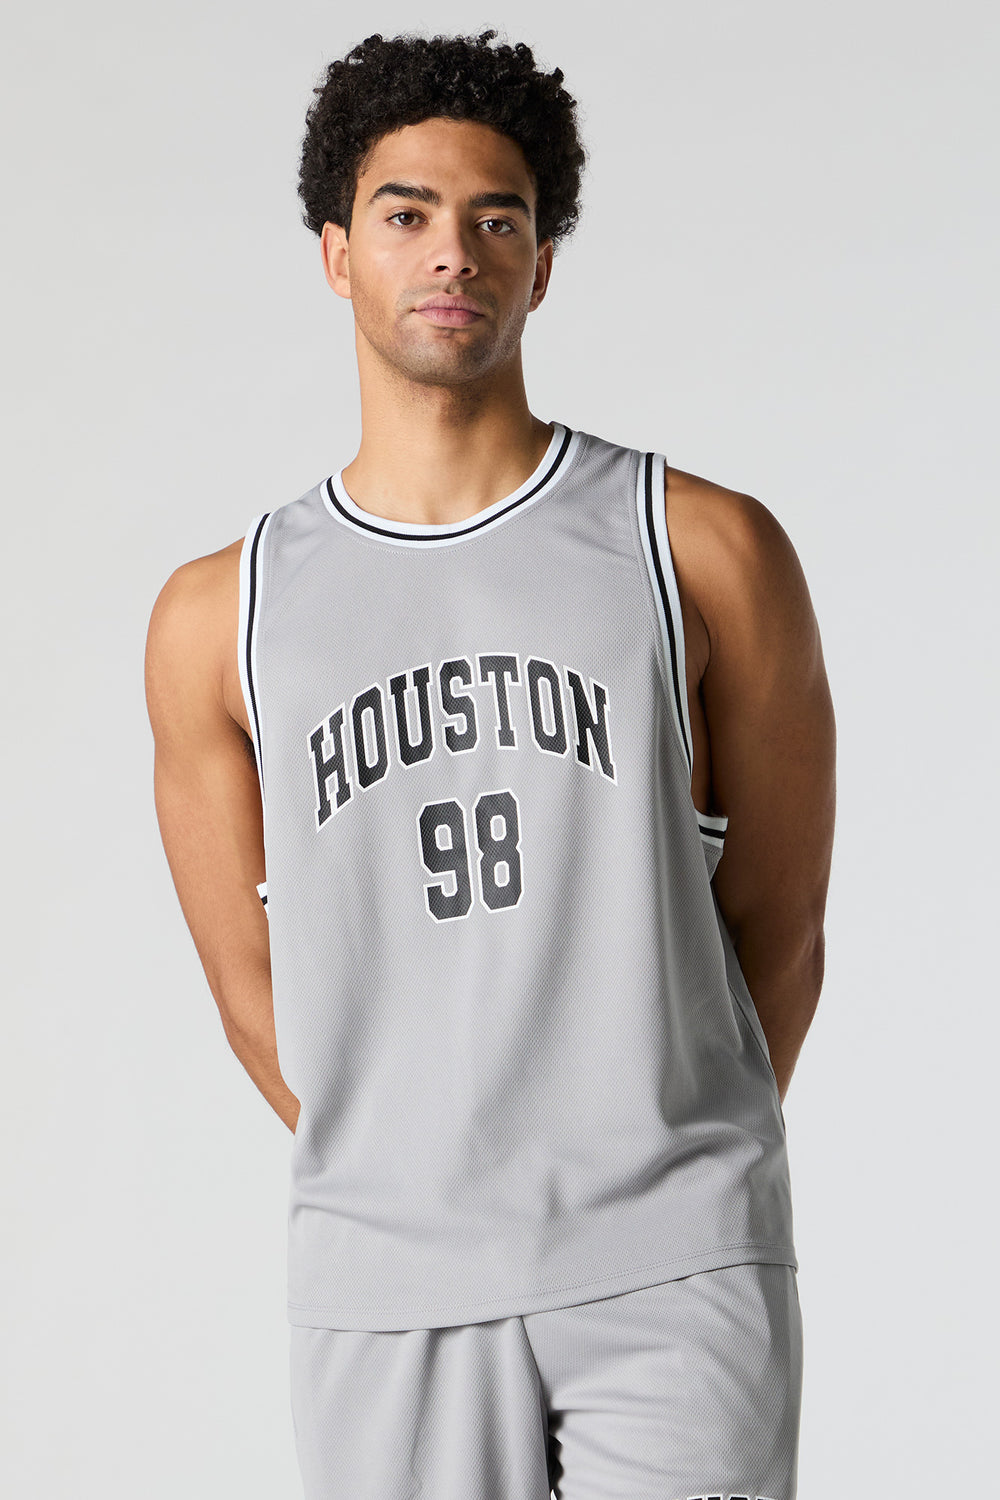 Houston Graphic Mesh Basketball Jersey Houston Graphic Mesh Basketball Jersey 1